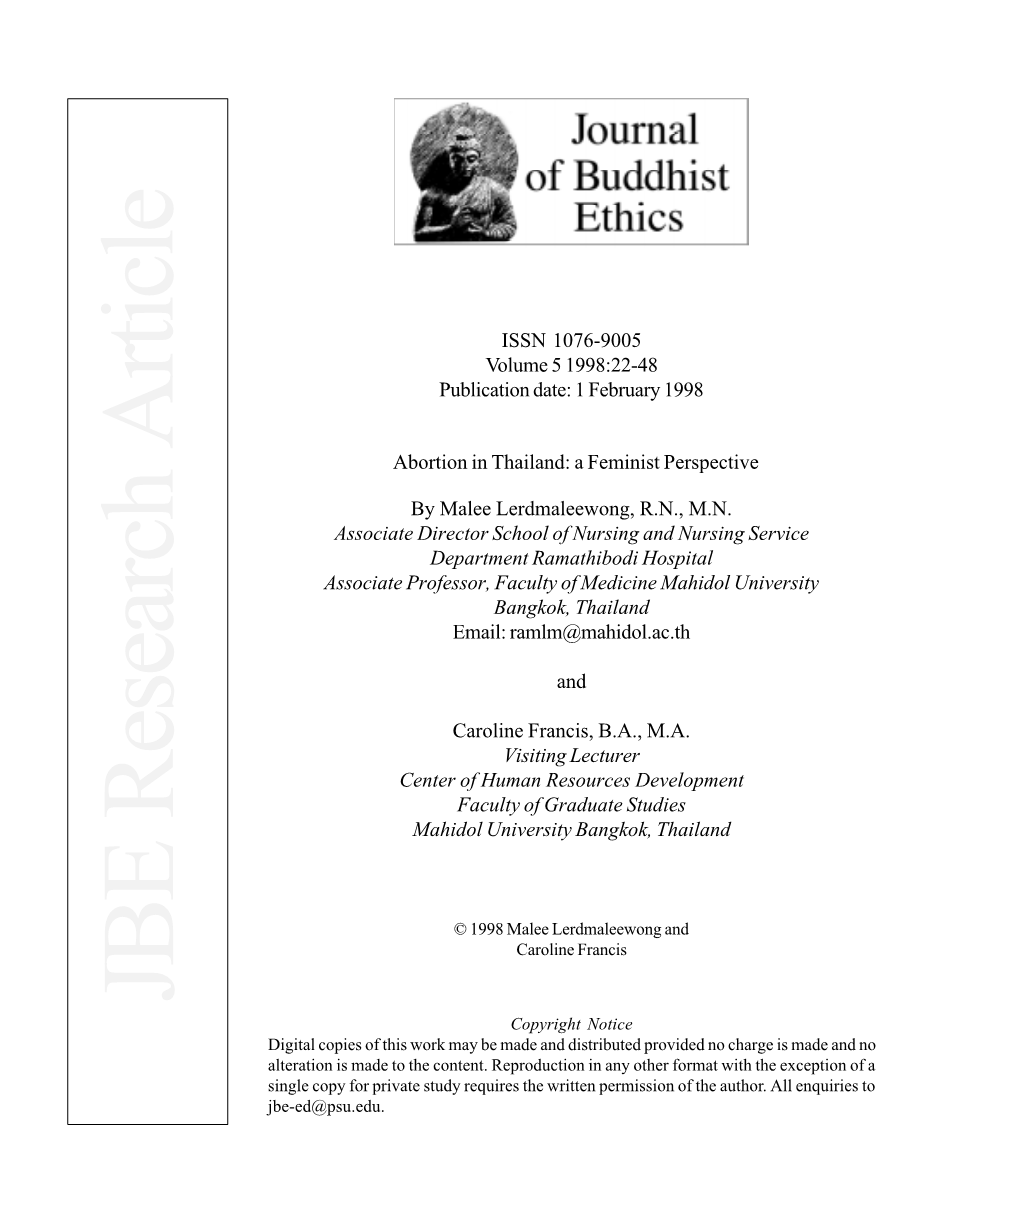 Journal of Buddhist Ethics Volume 5, 1998:22-48